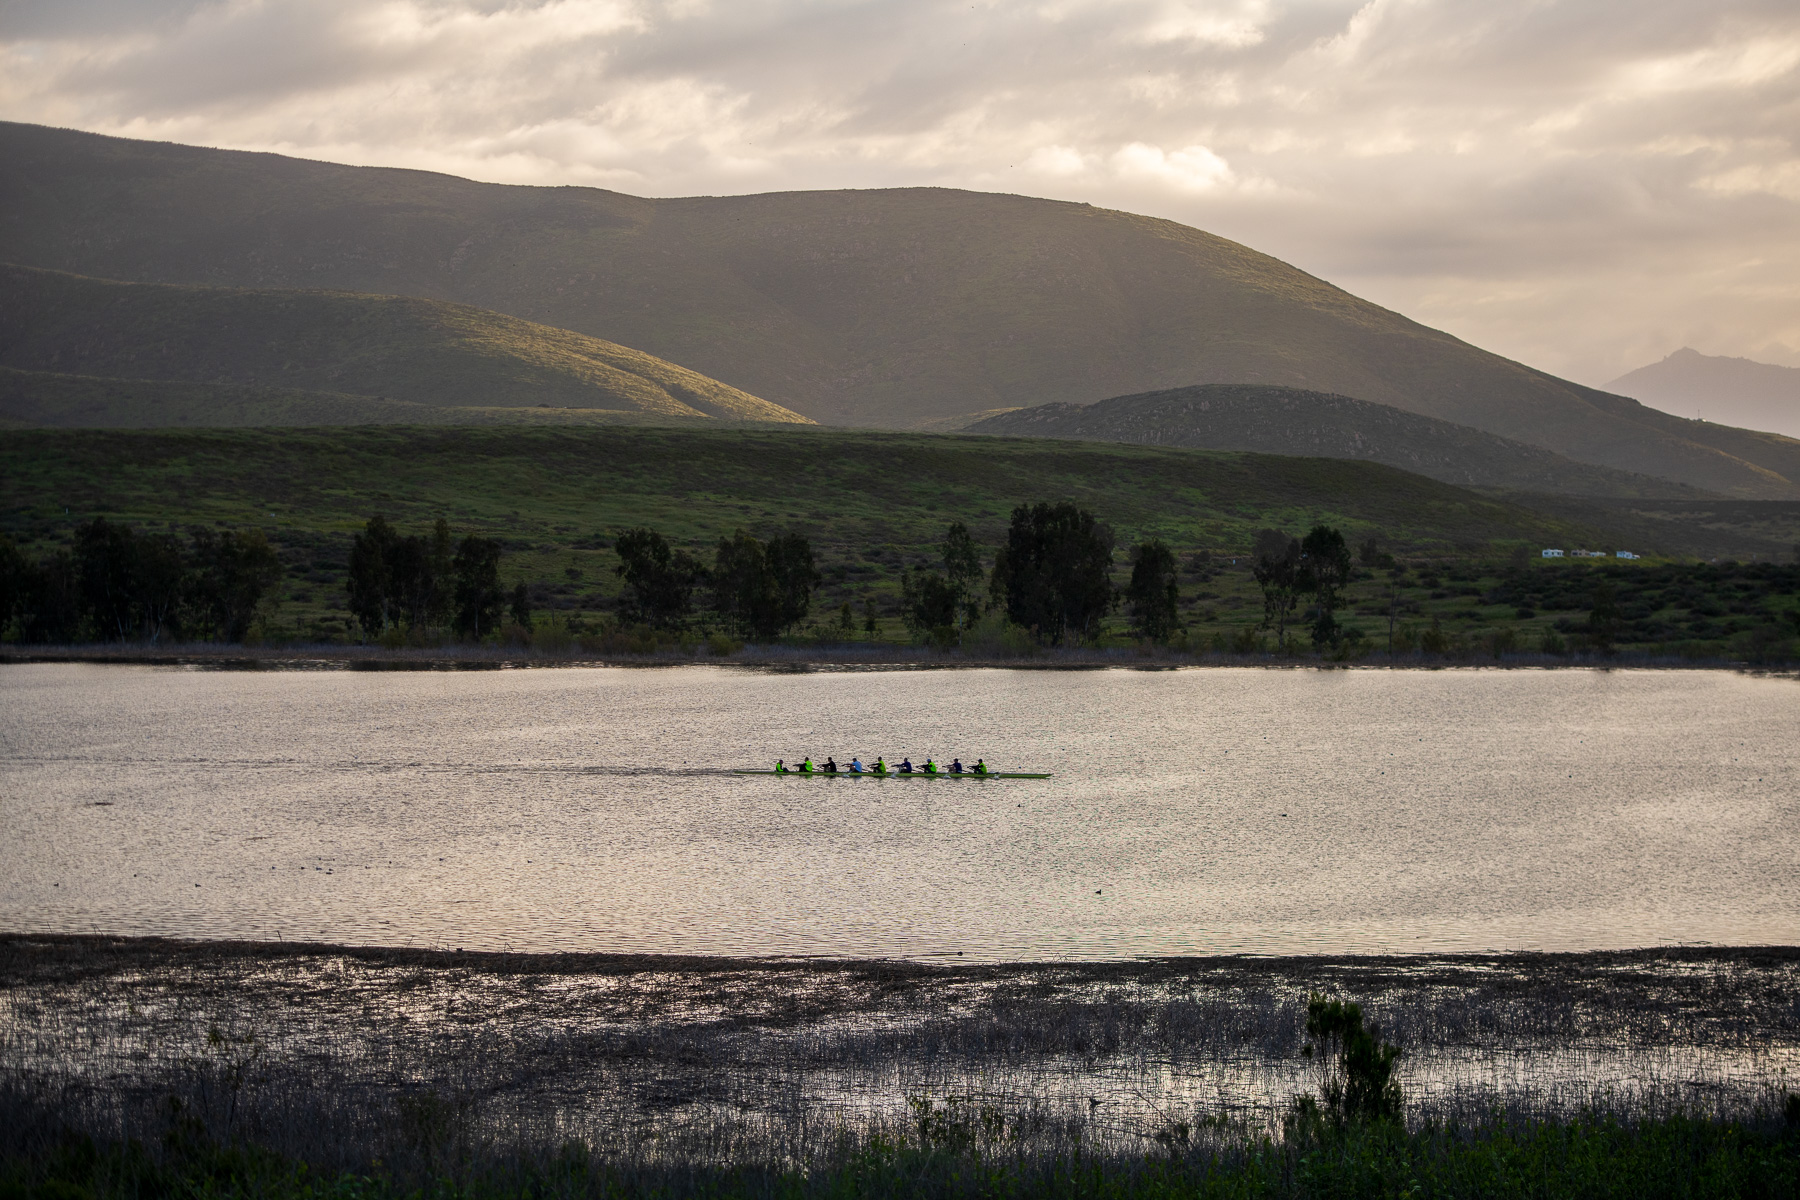 Olympic rowers train on lake